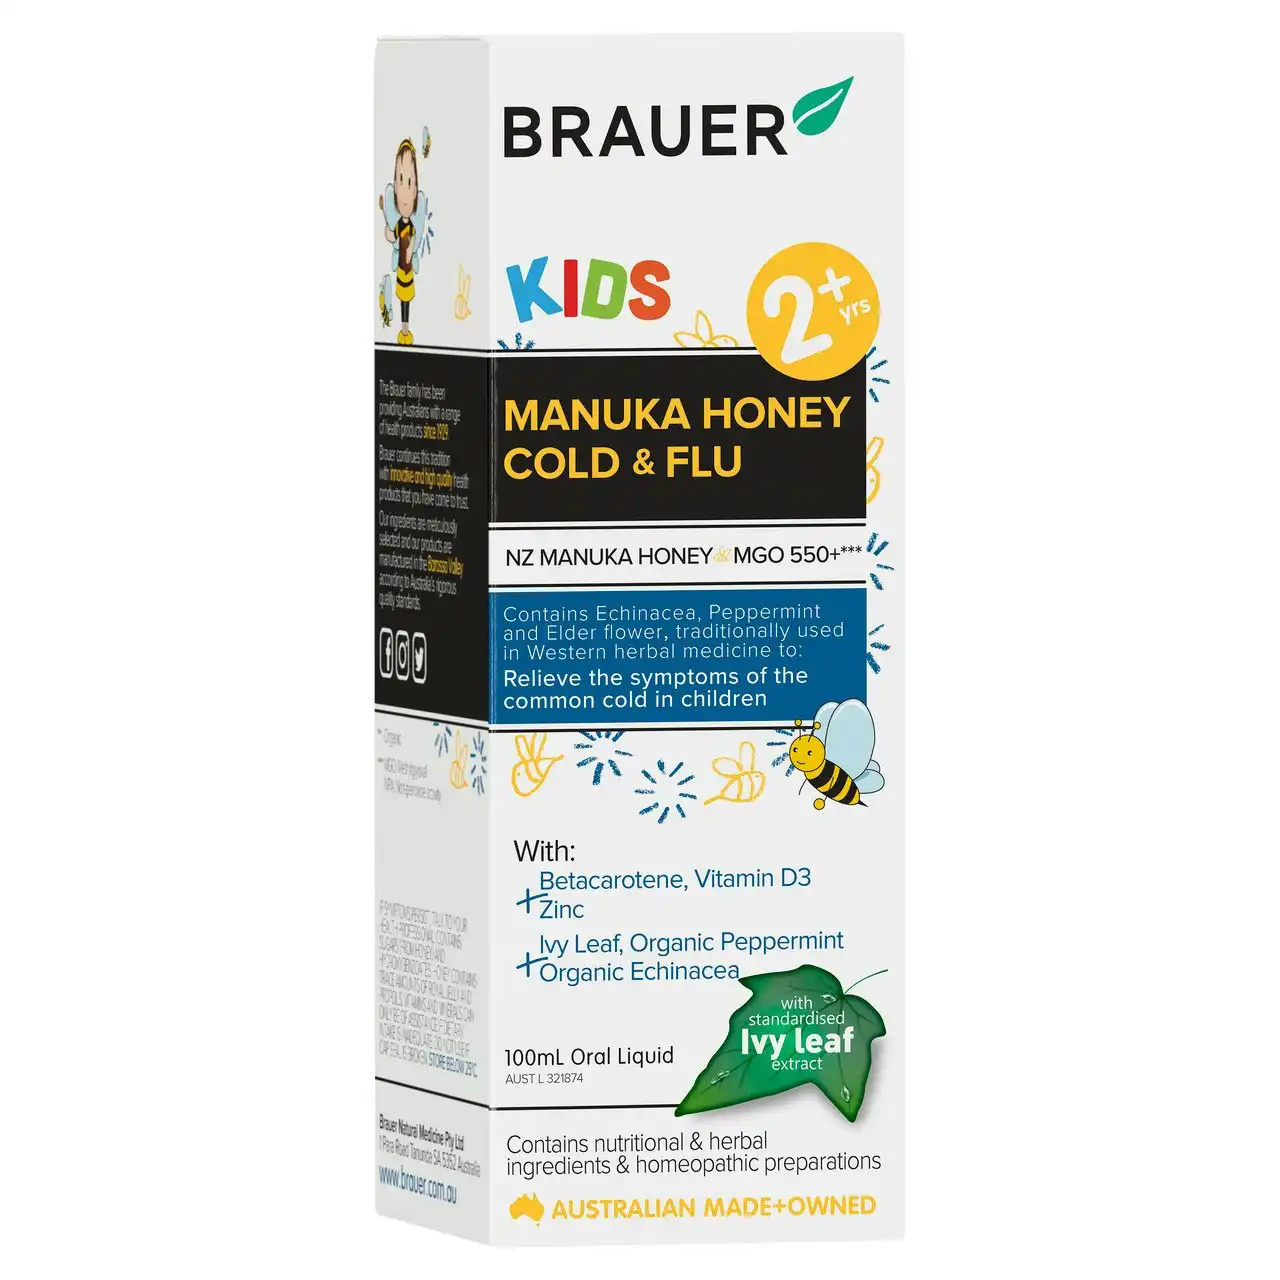 Brauer's Kids Manuka Honey Cold & Flu